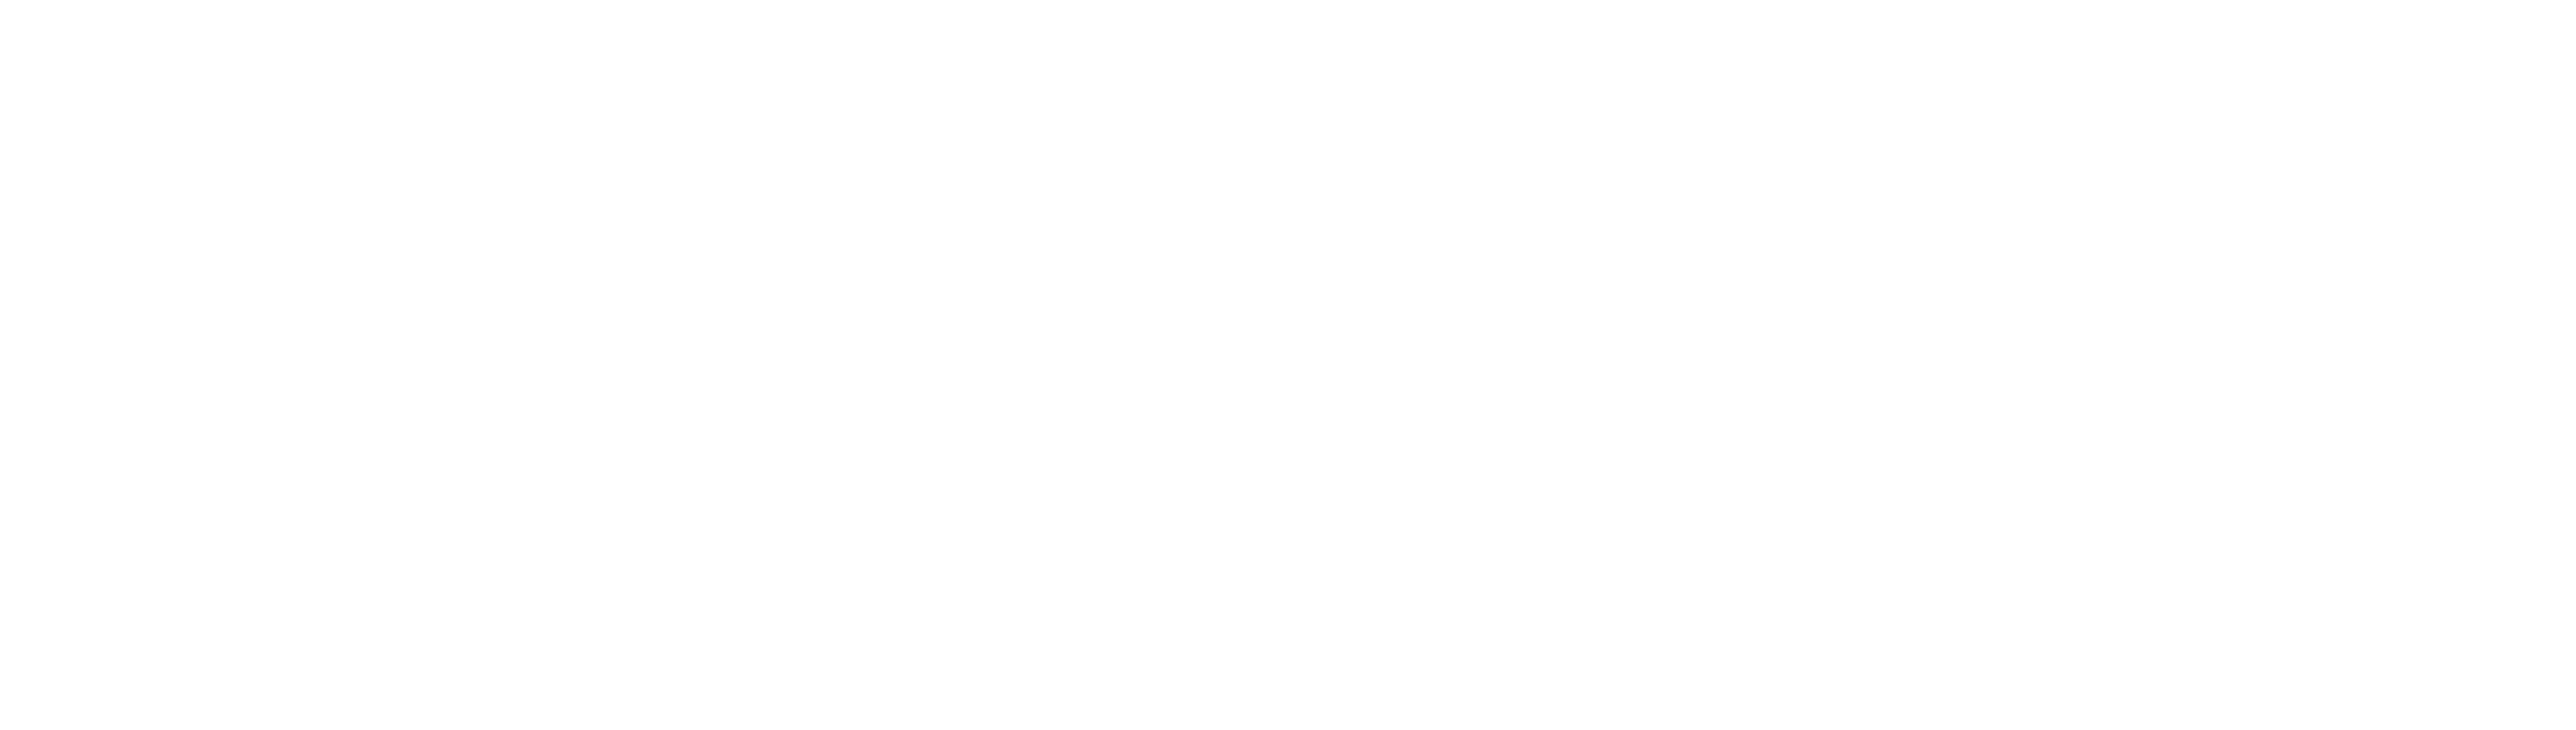 logo-myneocom-blanc